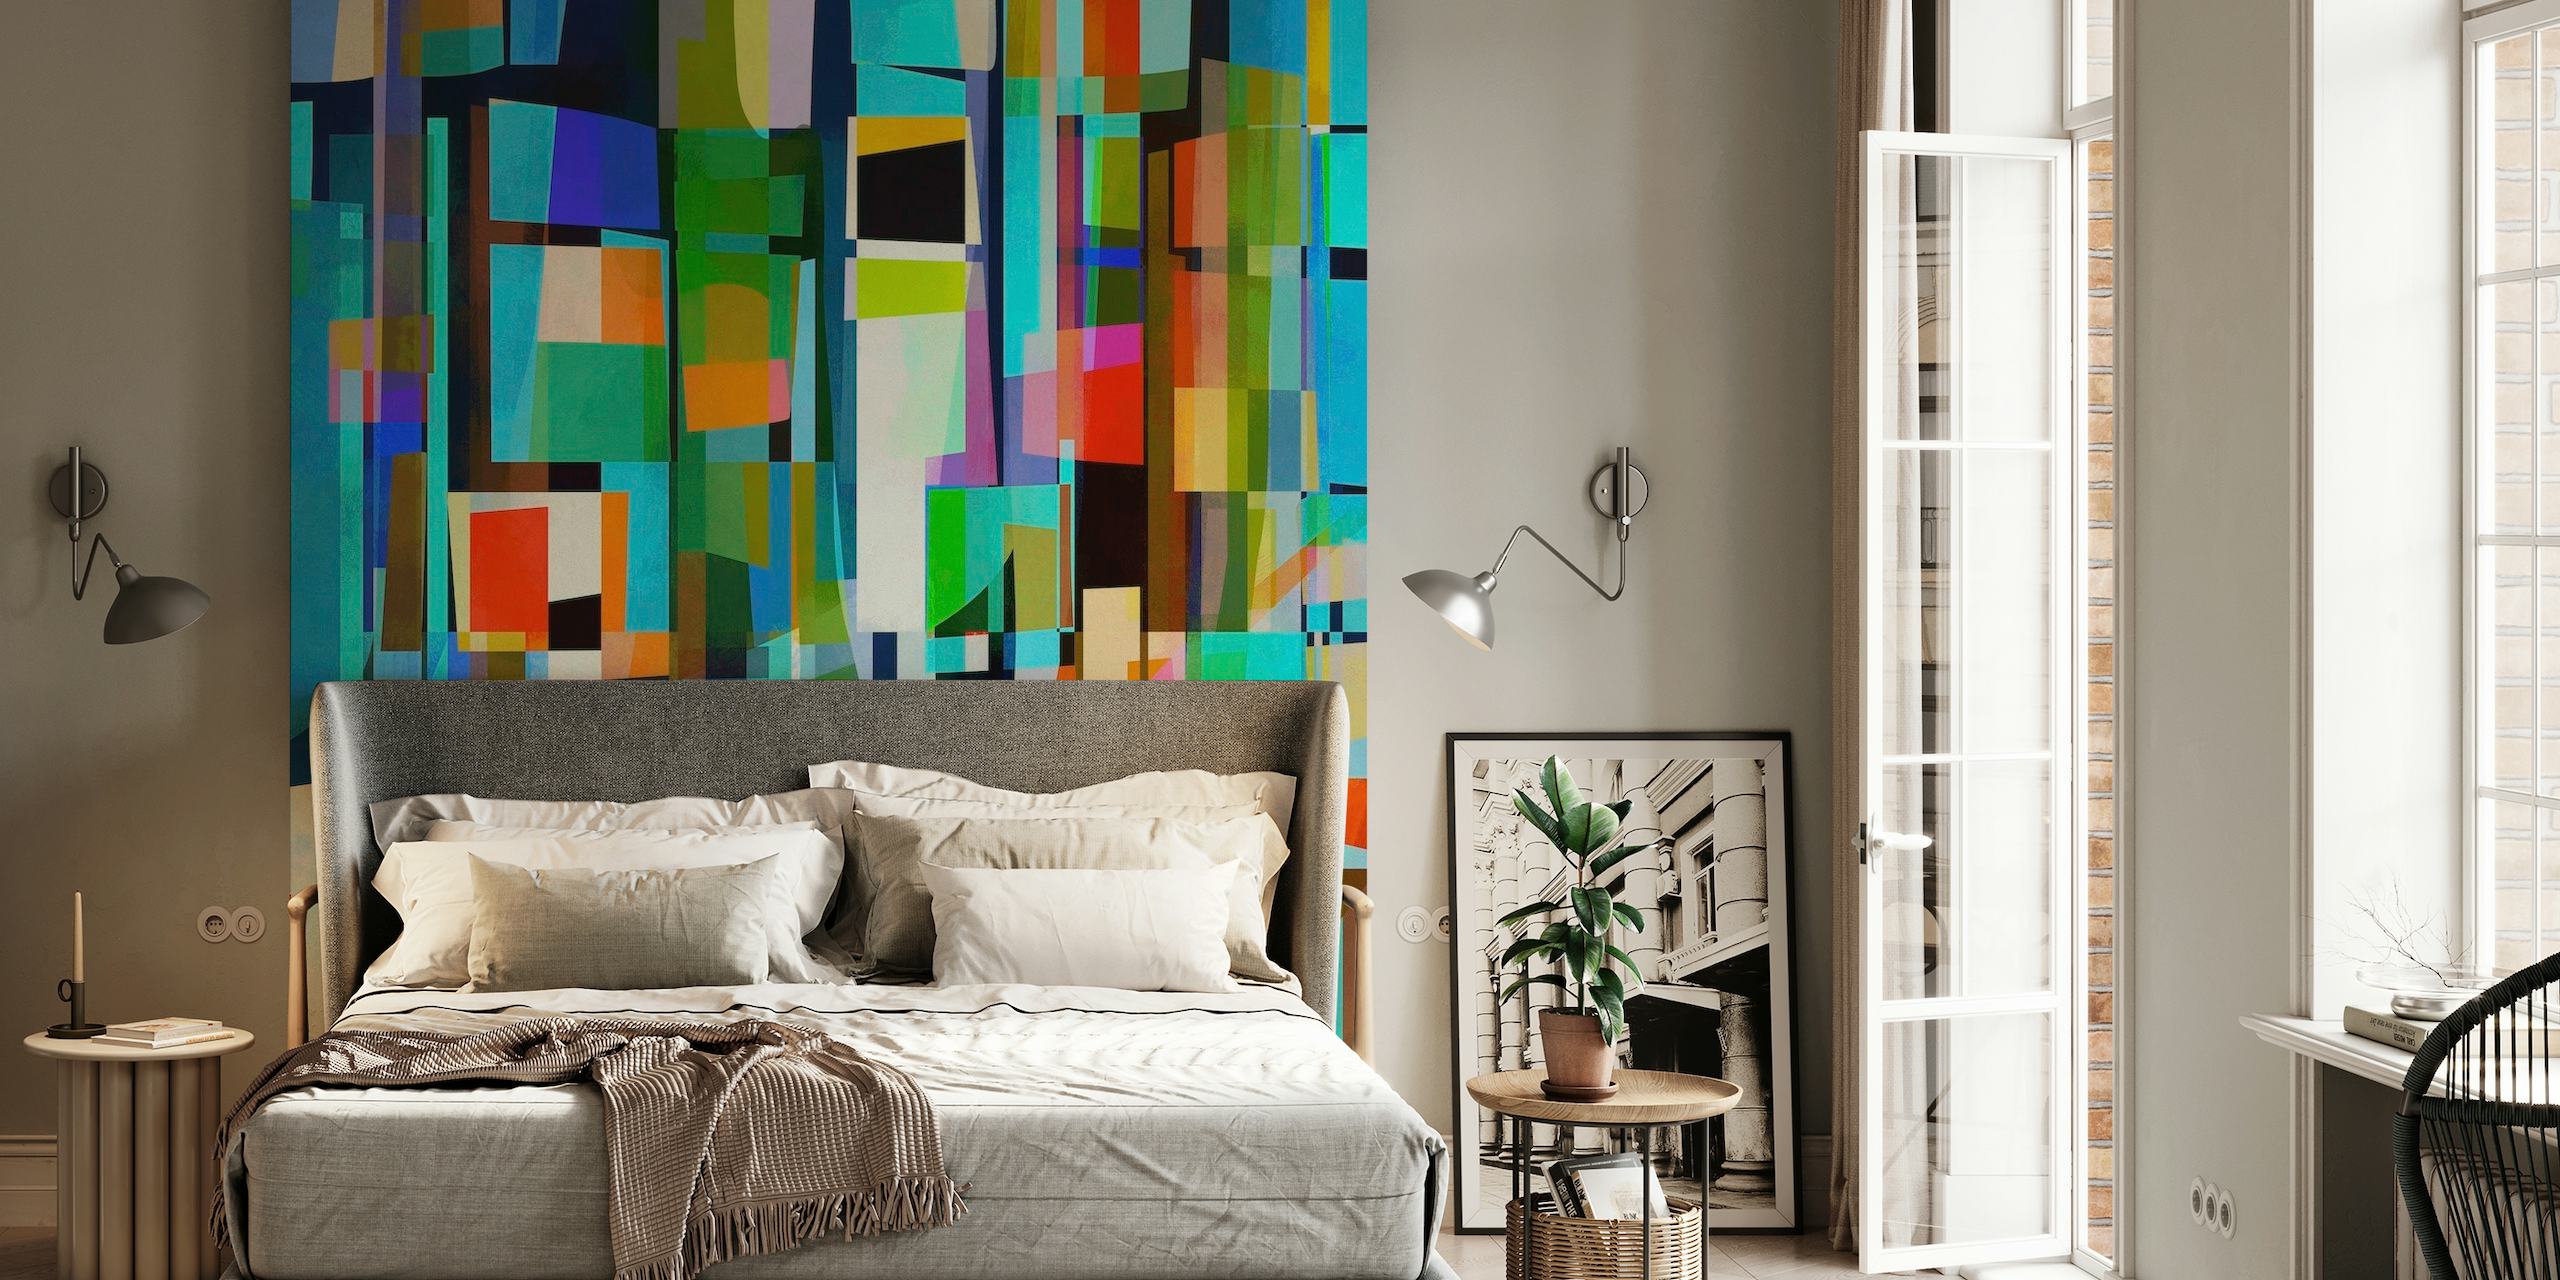 Barevná mozaiková čtvercová nástěnná malba s výrazným vícebarevným čtvercovým vzorem